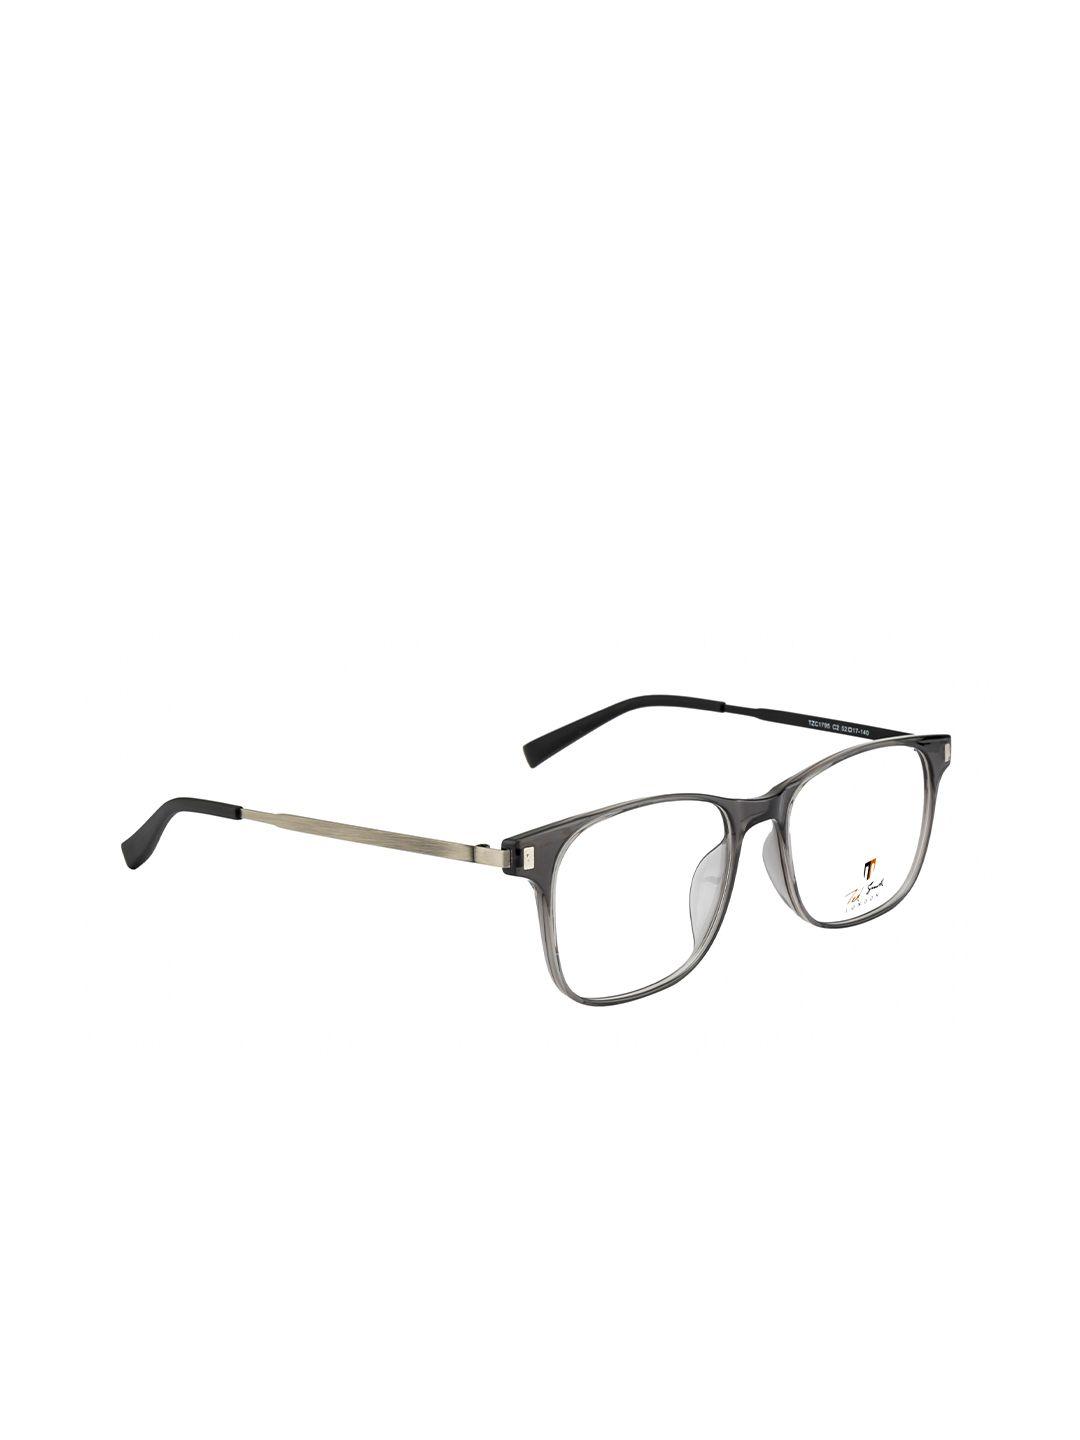 ted smith unisex grey & gold-toned full rim wayfarer frames eyeglasses